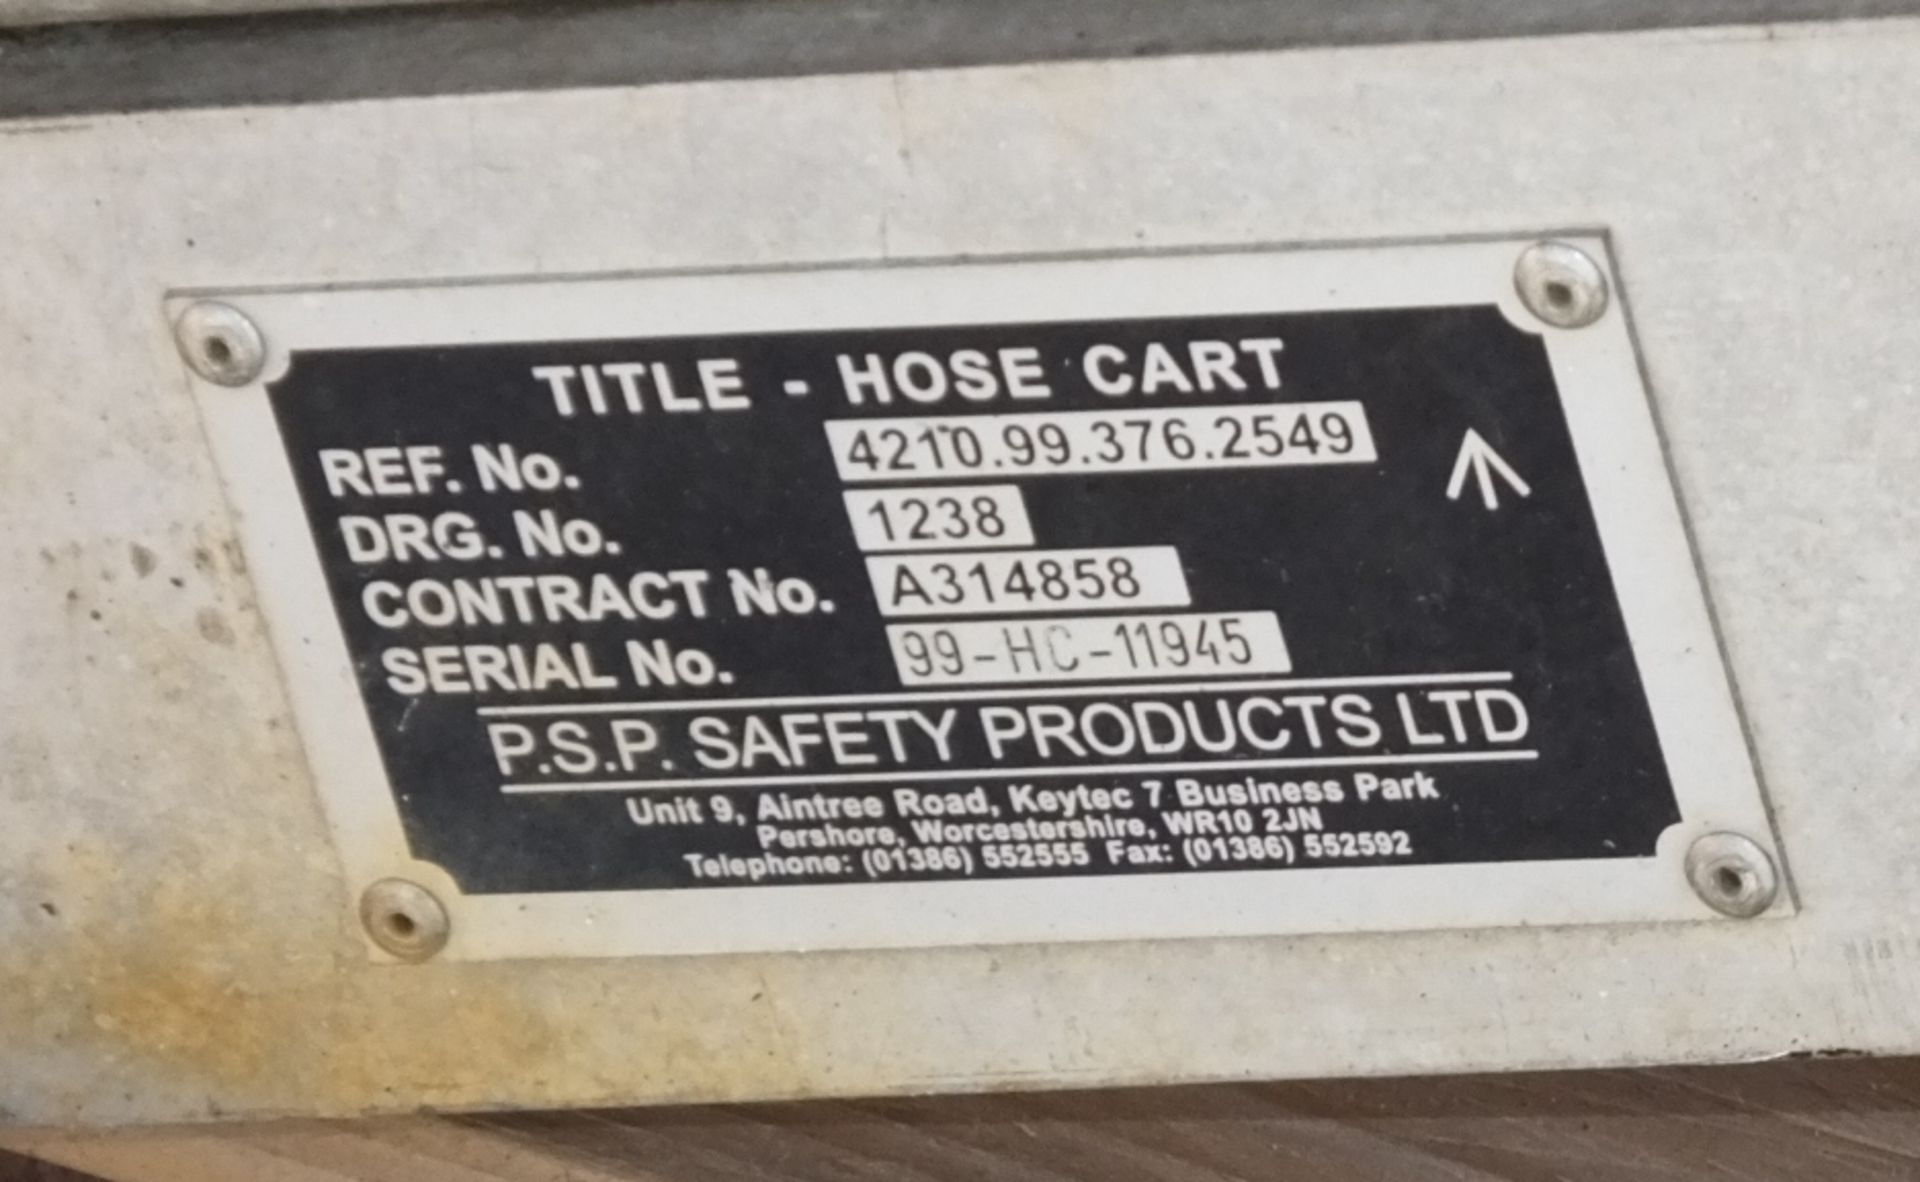 PSP Safety Products Ltd Metal 2 wheeled trailer - Hose cart - Image 2 of 2